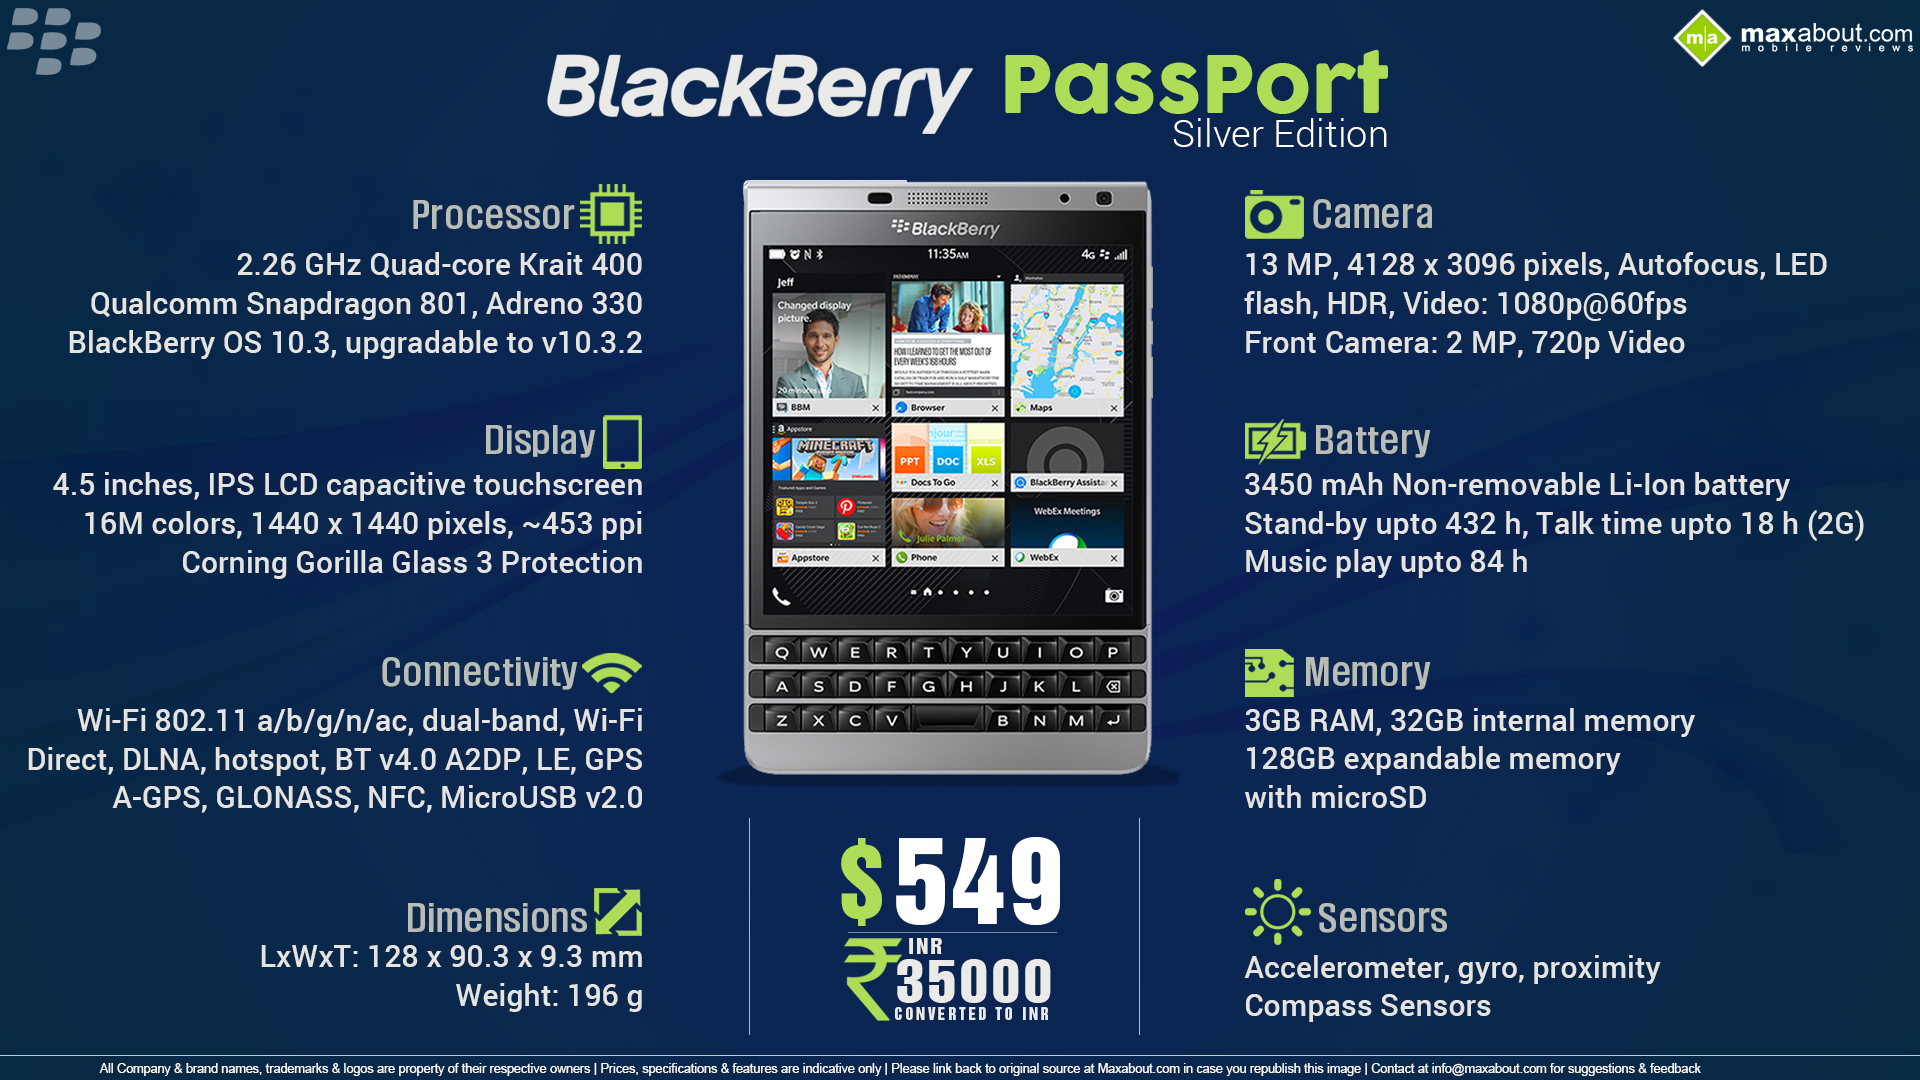 Quick Facts - BlackBerry Passport Silver Edition